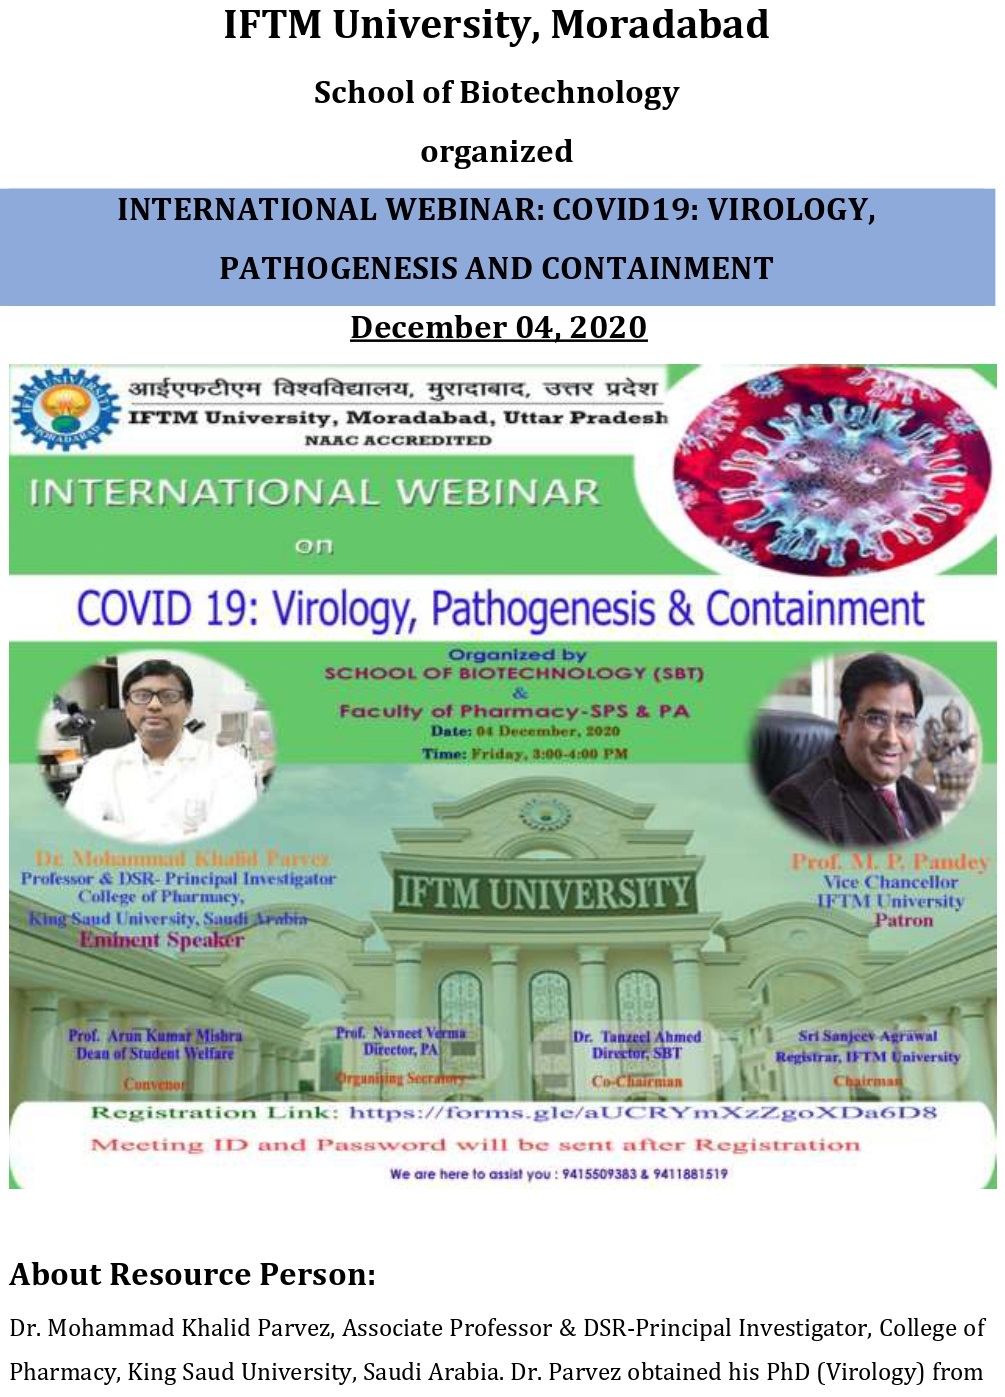 International Webinar: Covid19: Virology, Pathogenesis And Containment